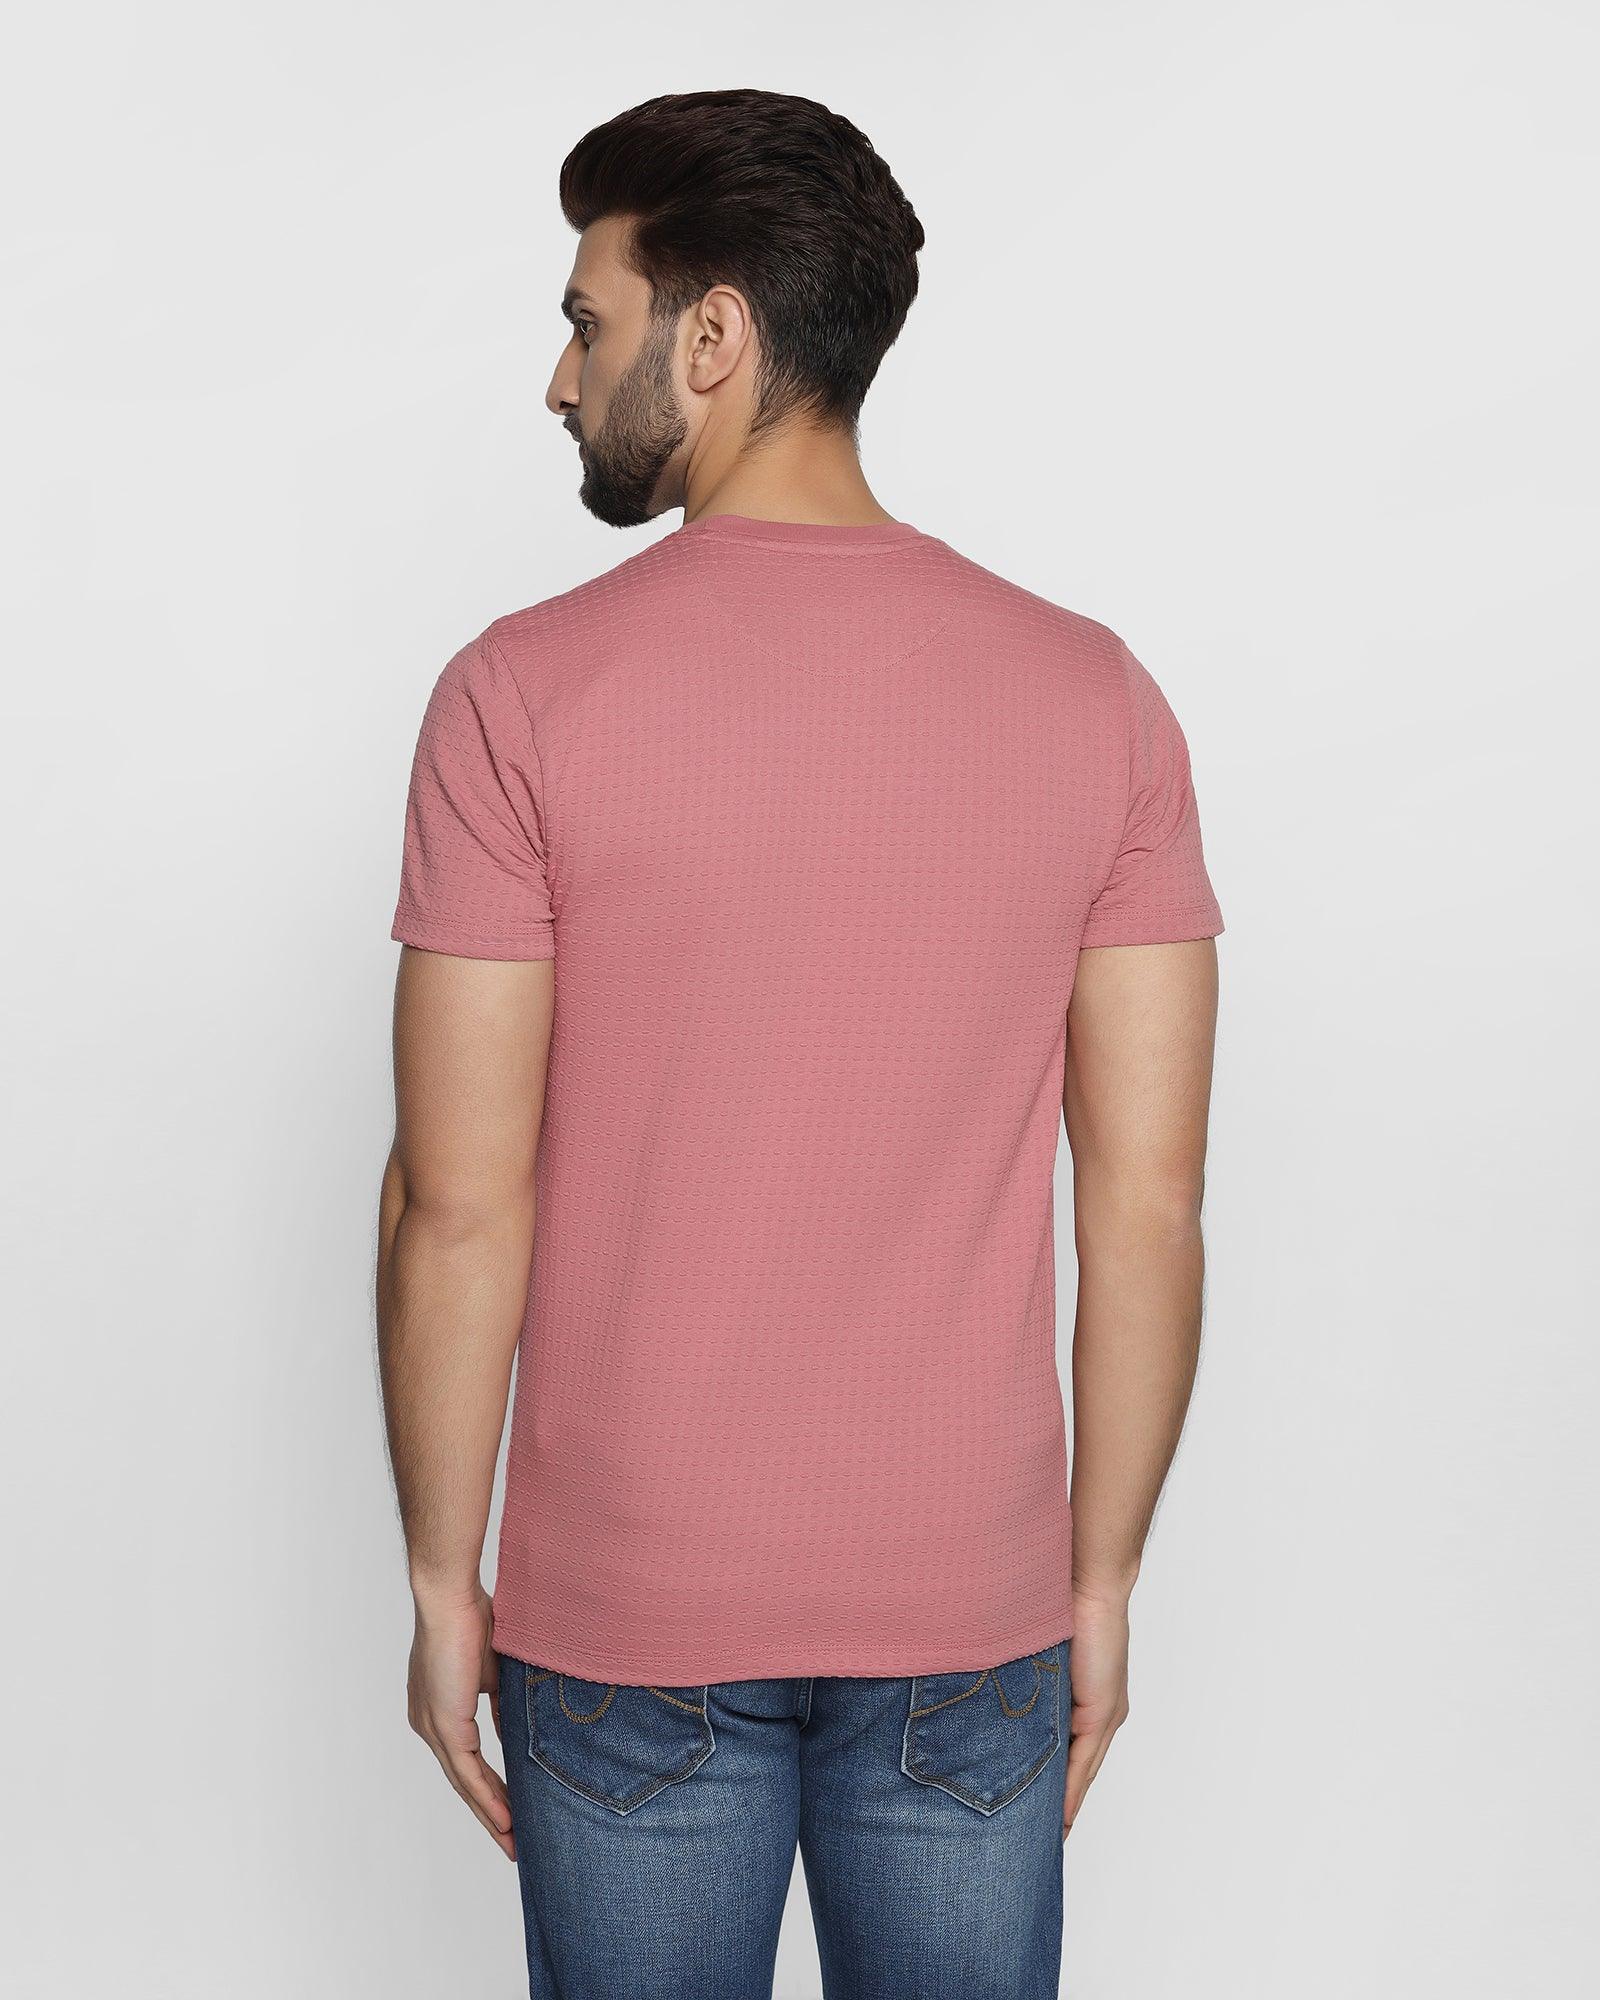 Crew Neck Dusty Pink Solid T Shirt - Sheath